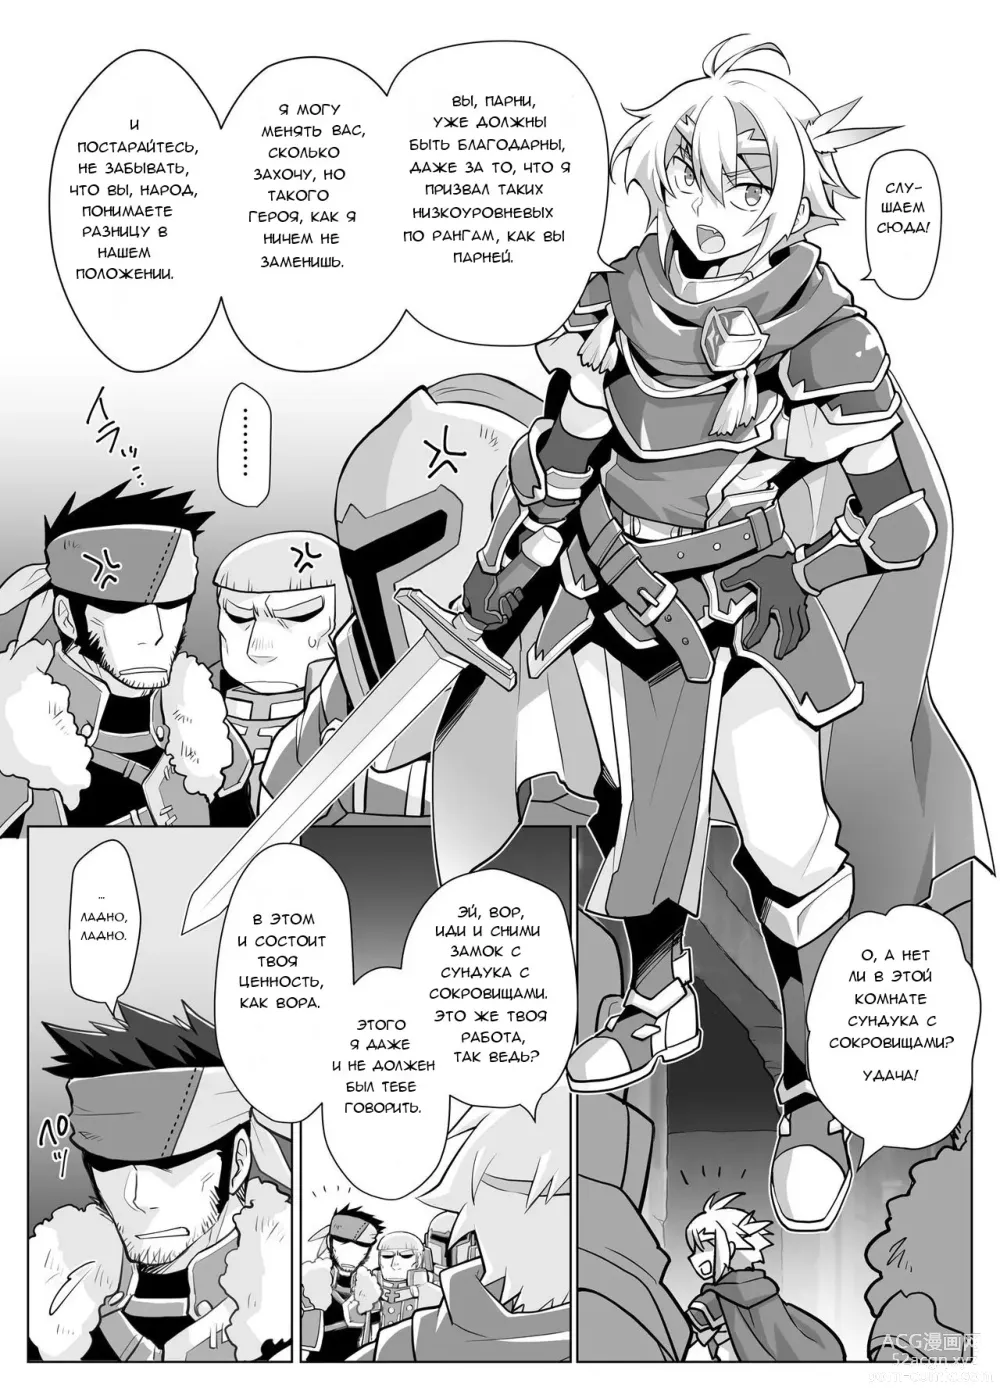 Page 4 of doujinshi Становление герой-чан 1-го уровня